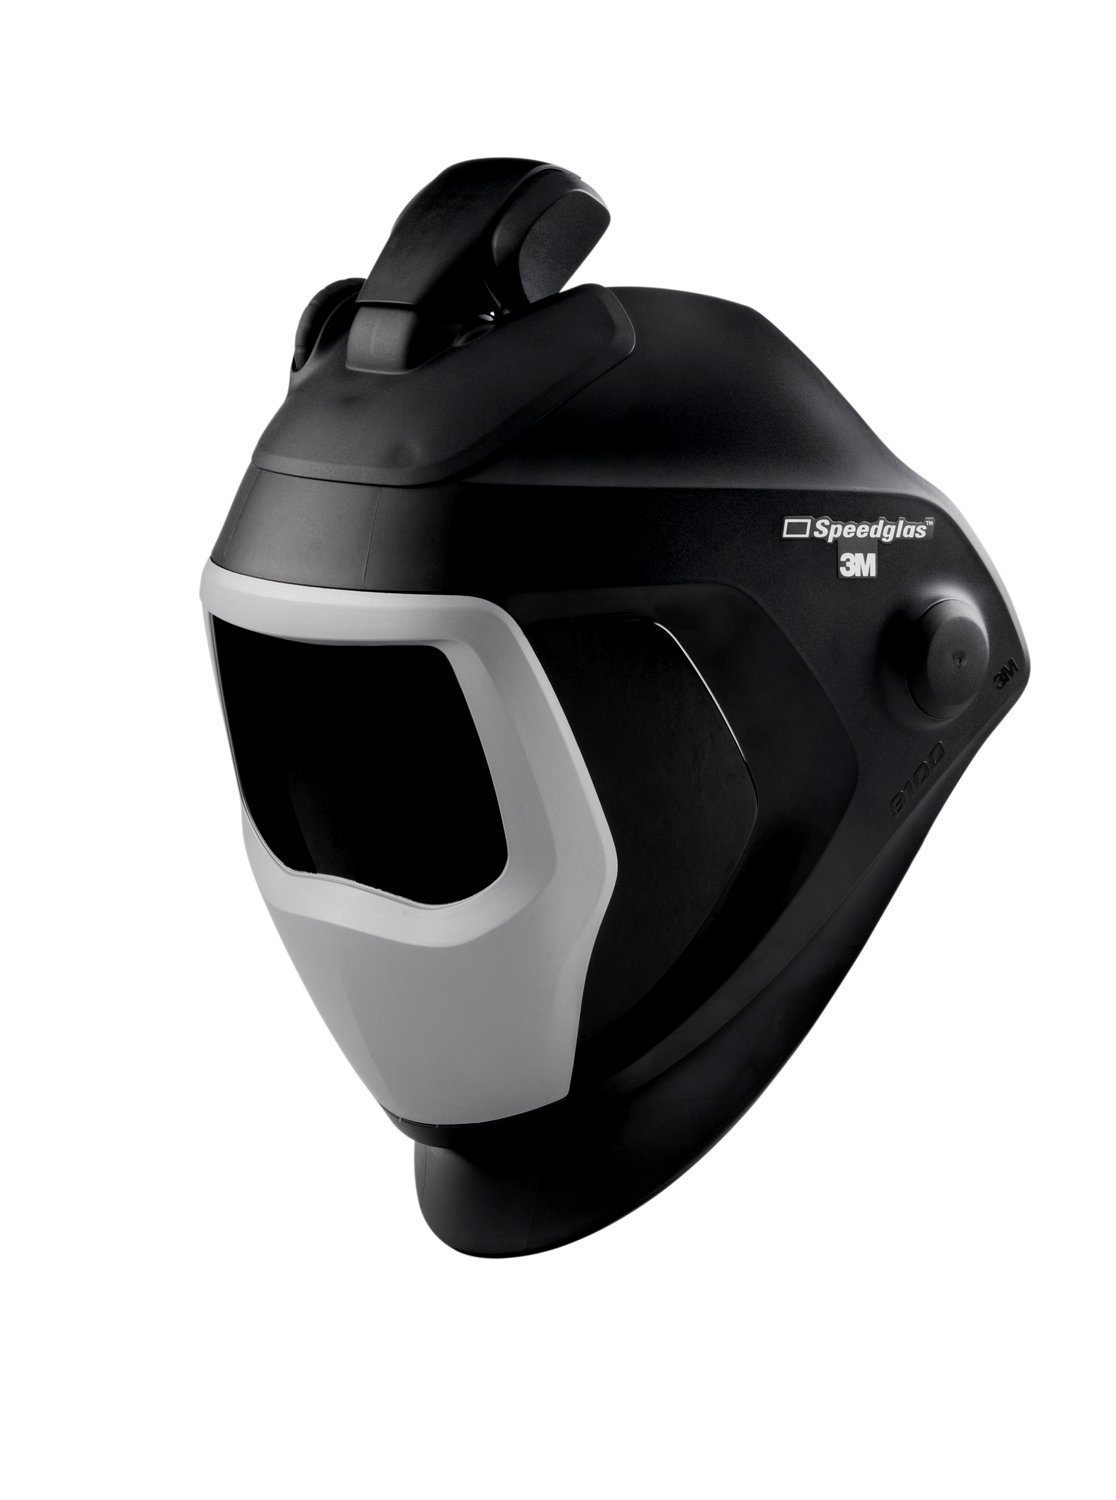 7100200560 - 3M Speedglas 9100 QR Welding Helmet 06-0300-52QR, No Rail, Hard Hat
and ADF, 1 EA/Case